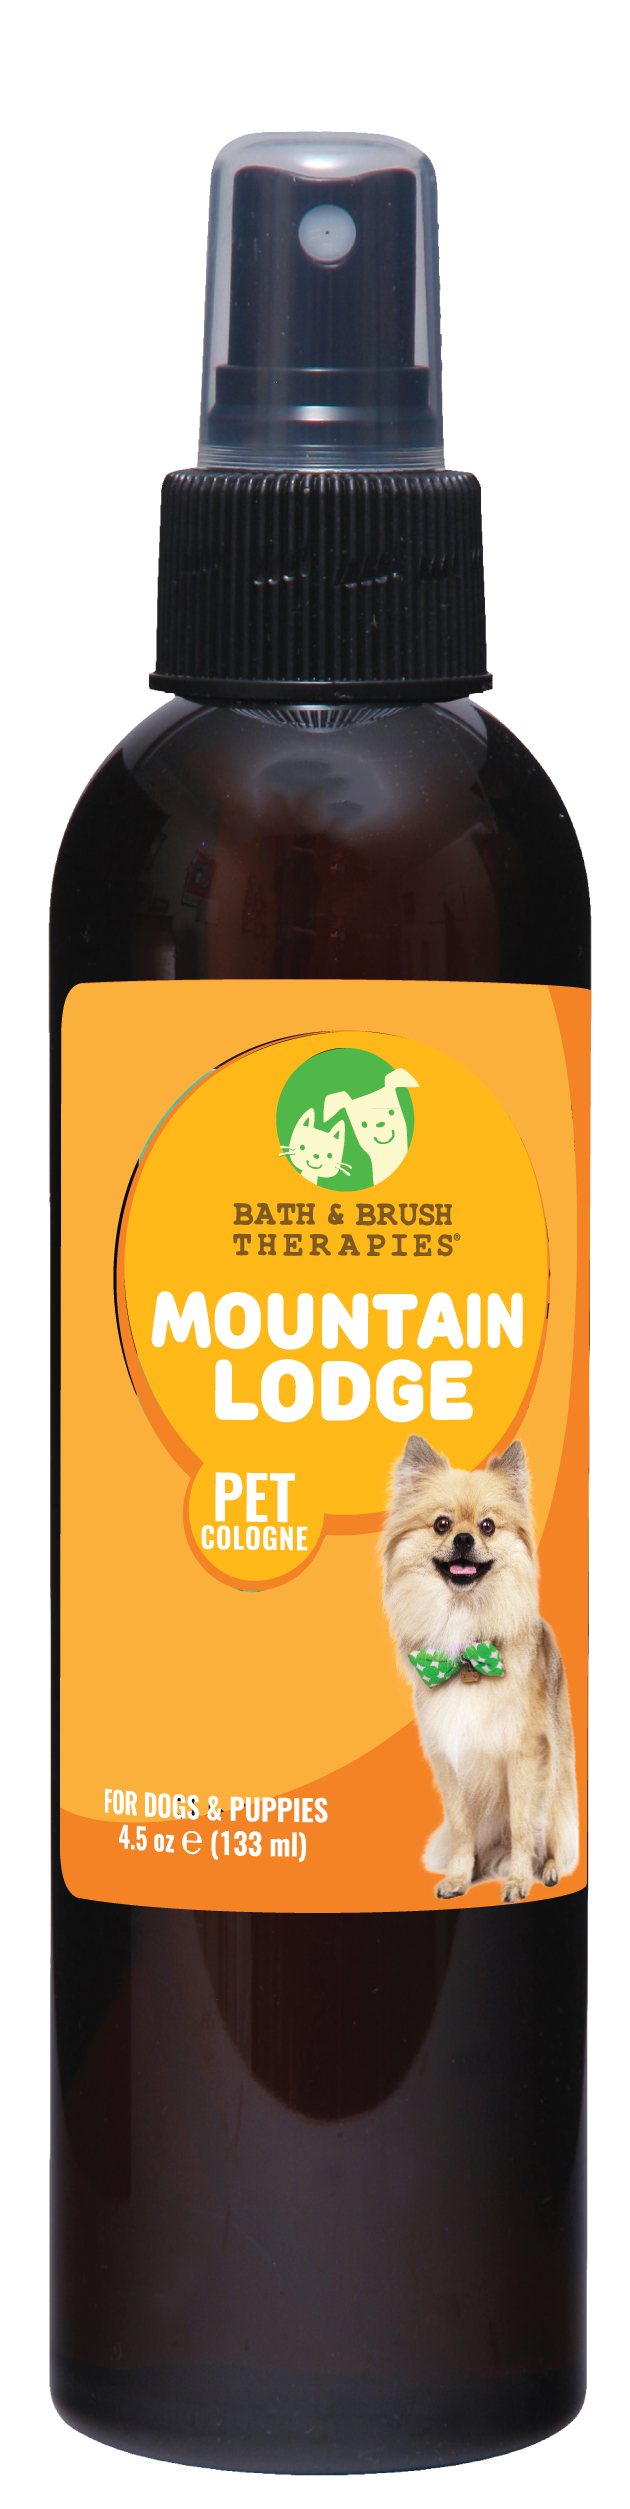 Mountain Lodge Pet Cologne